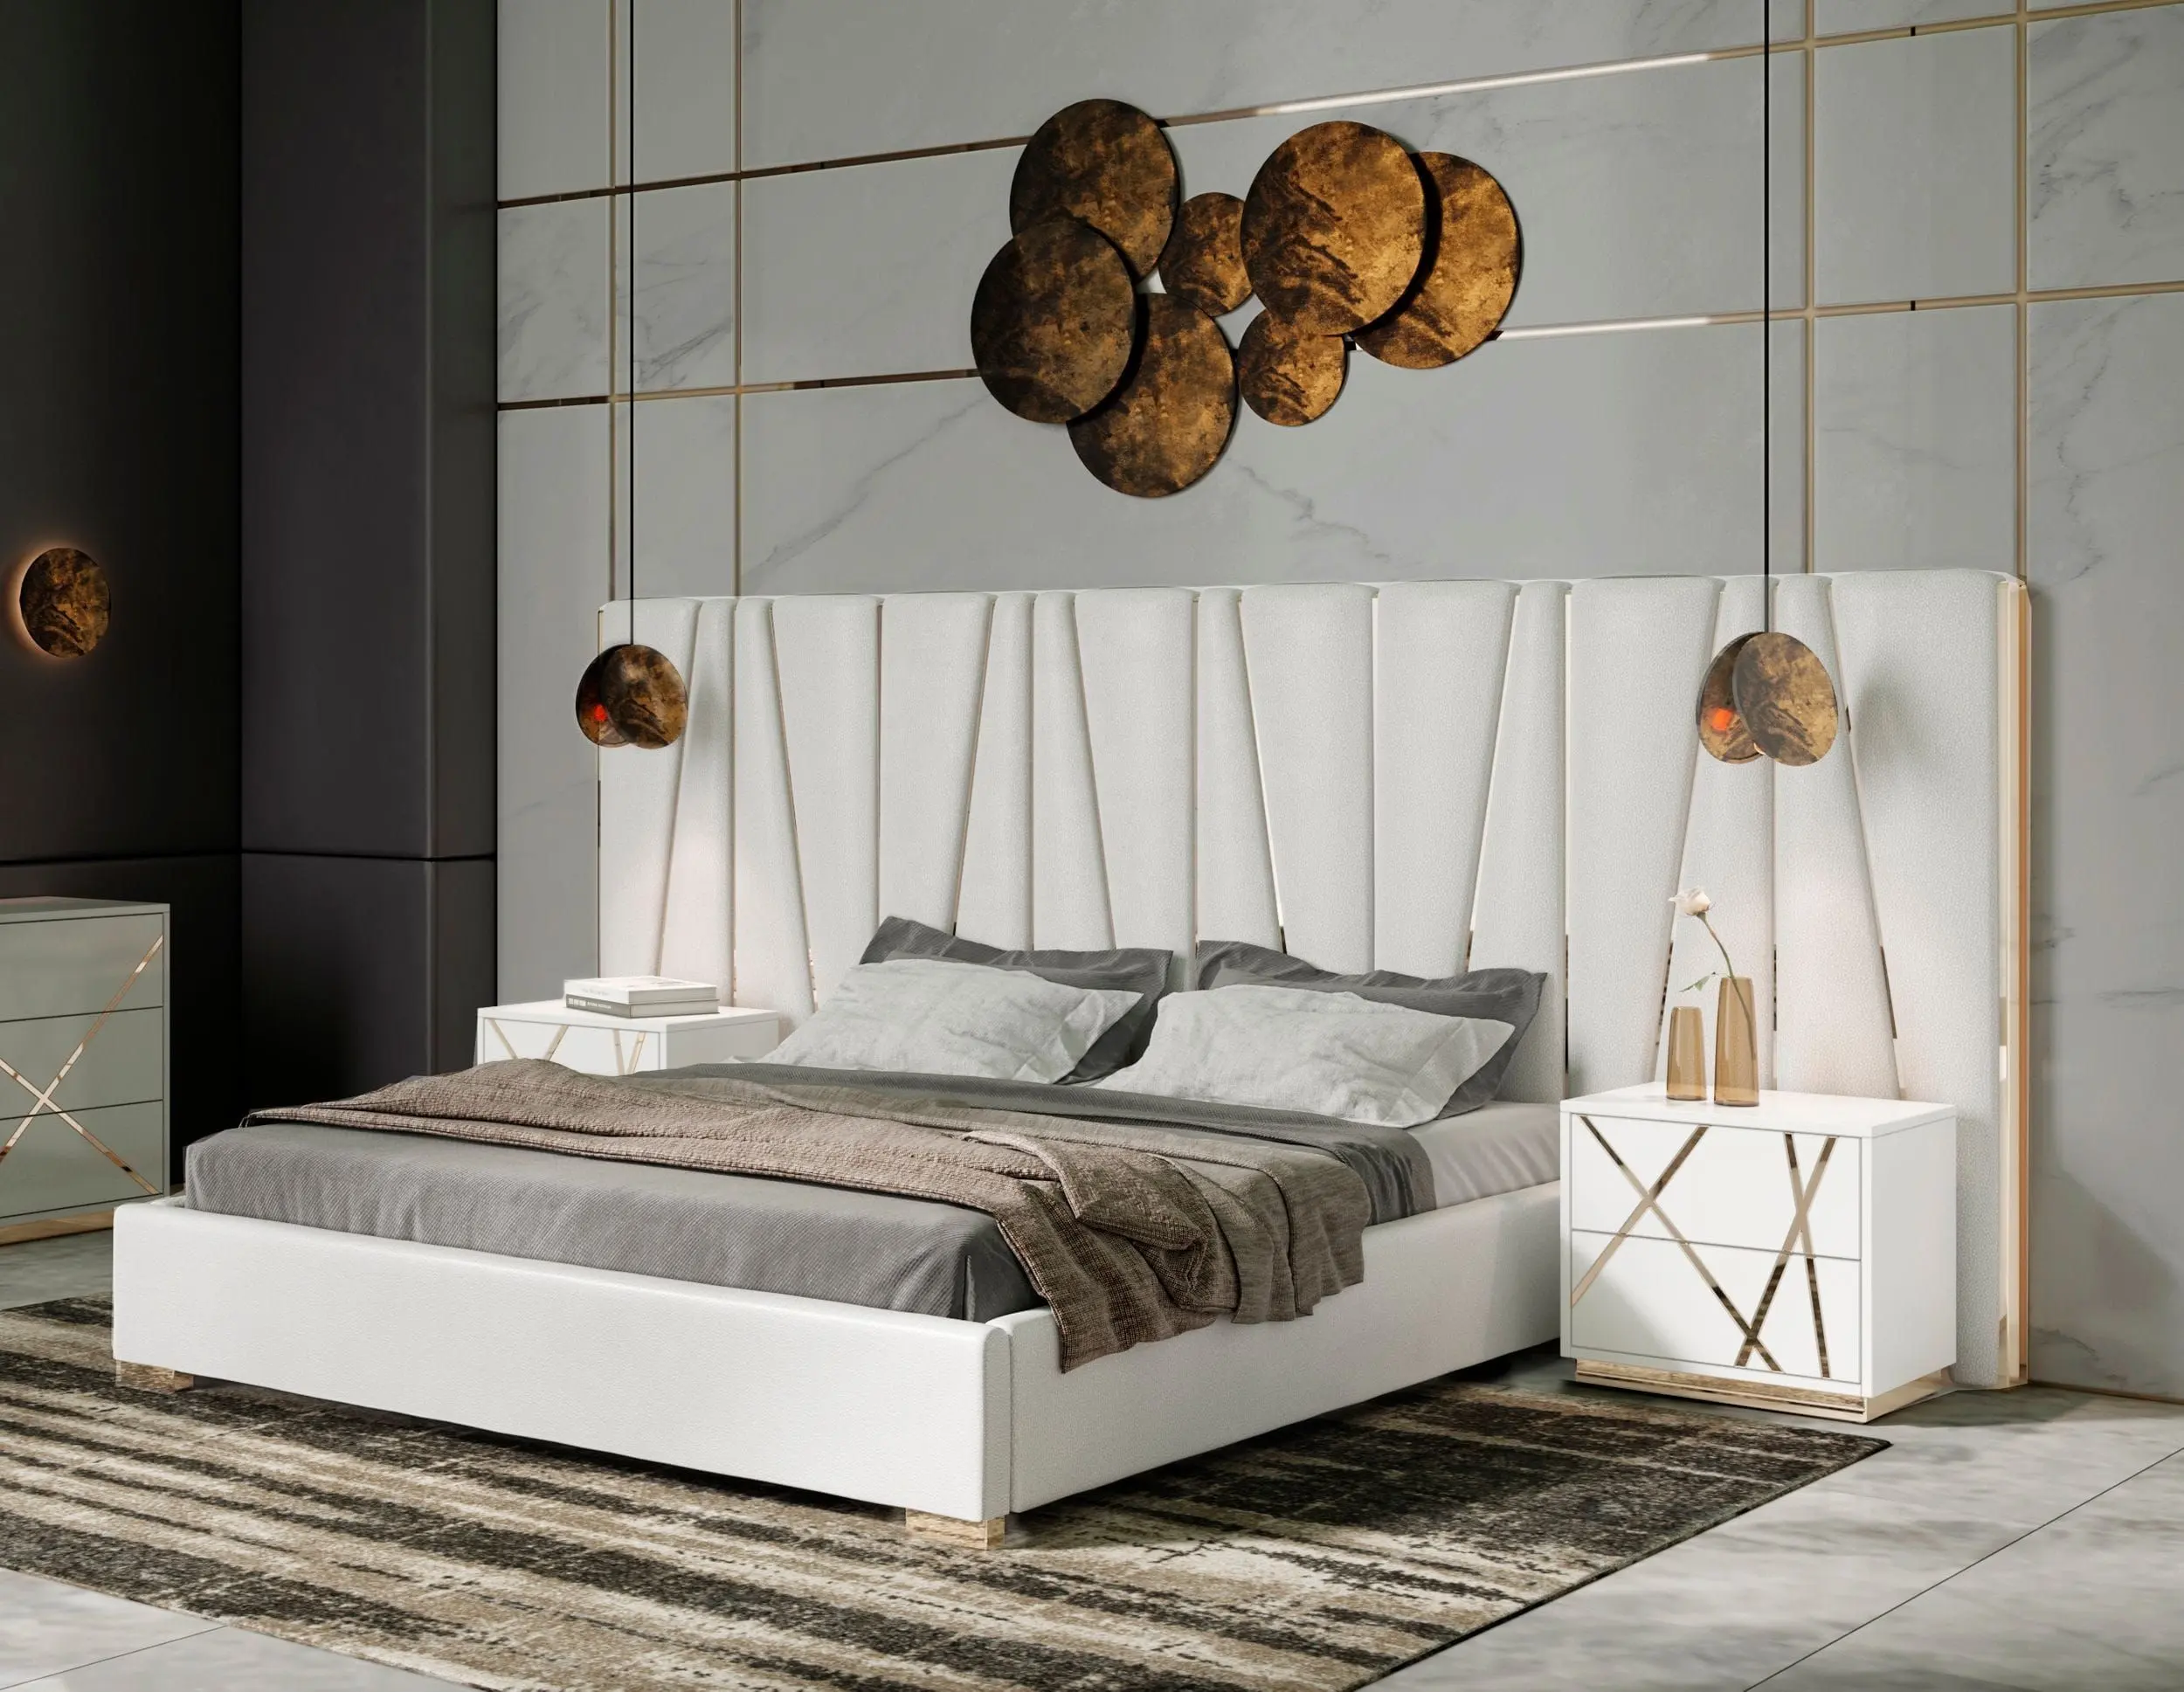 NOVA White High Gloss California King Bedroom Gold Headboard 3 Piece Set Furniture Modern Luxury Double Queen Bed